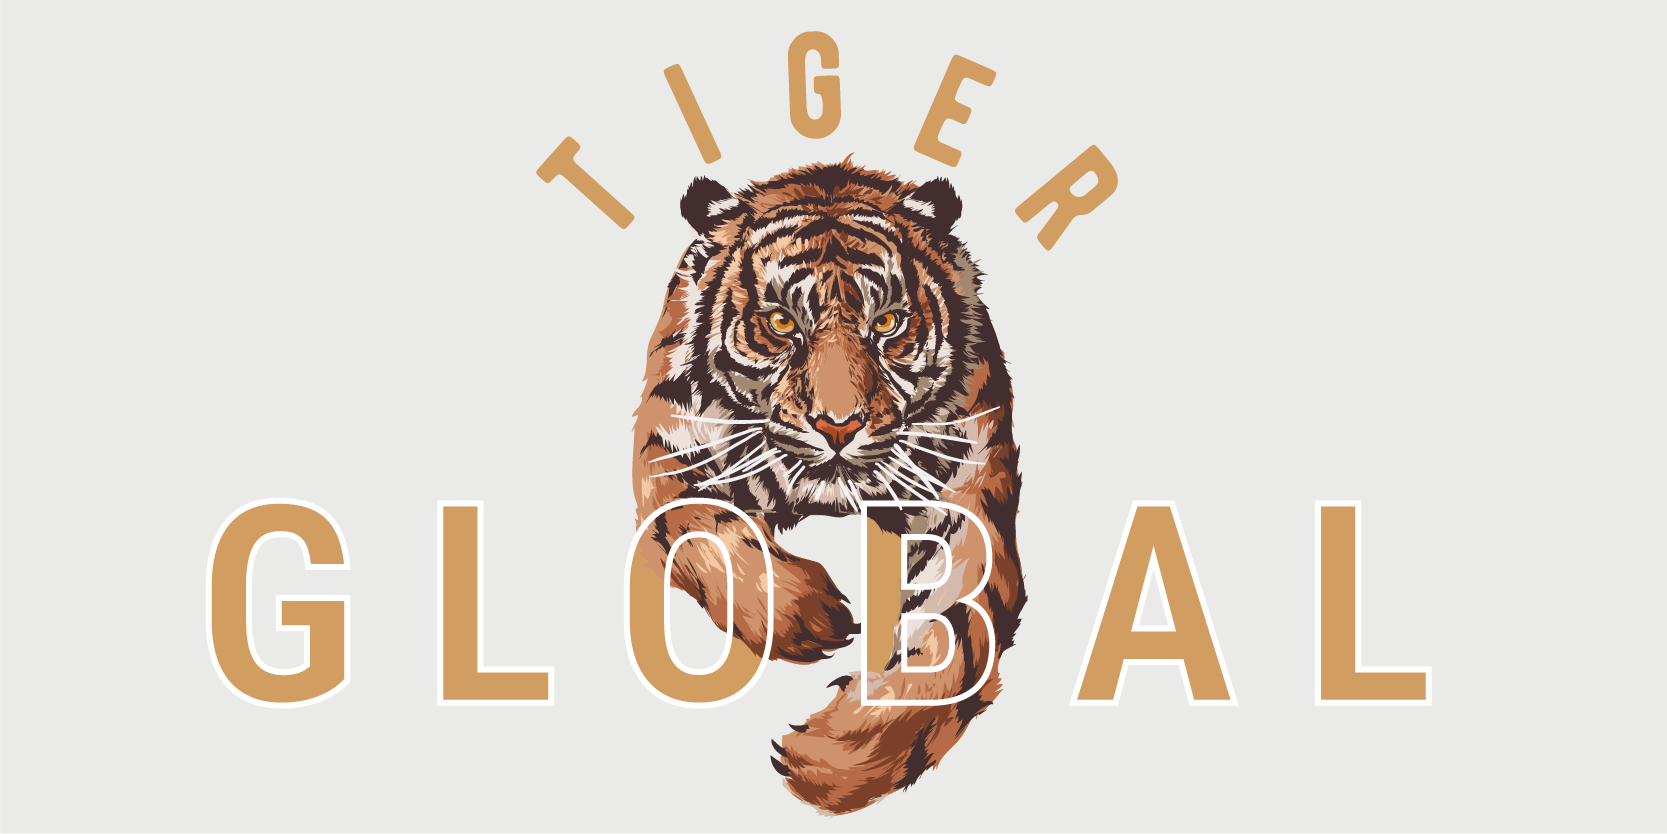 Tiger Global struggles to raise even half of $6B fund target